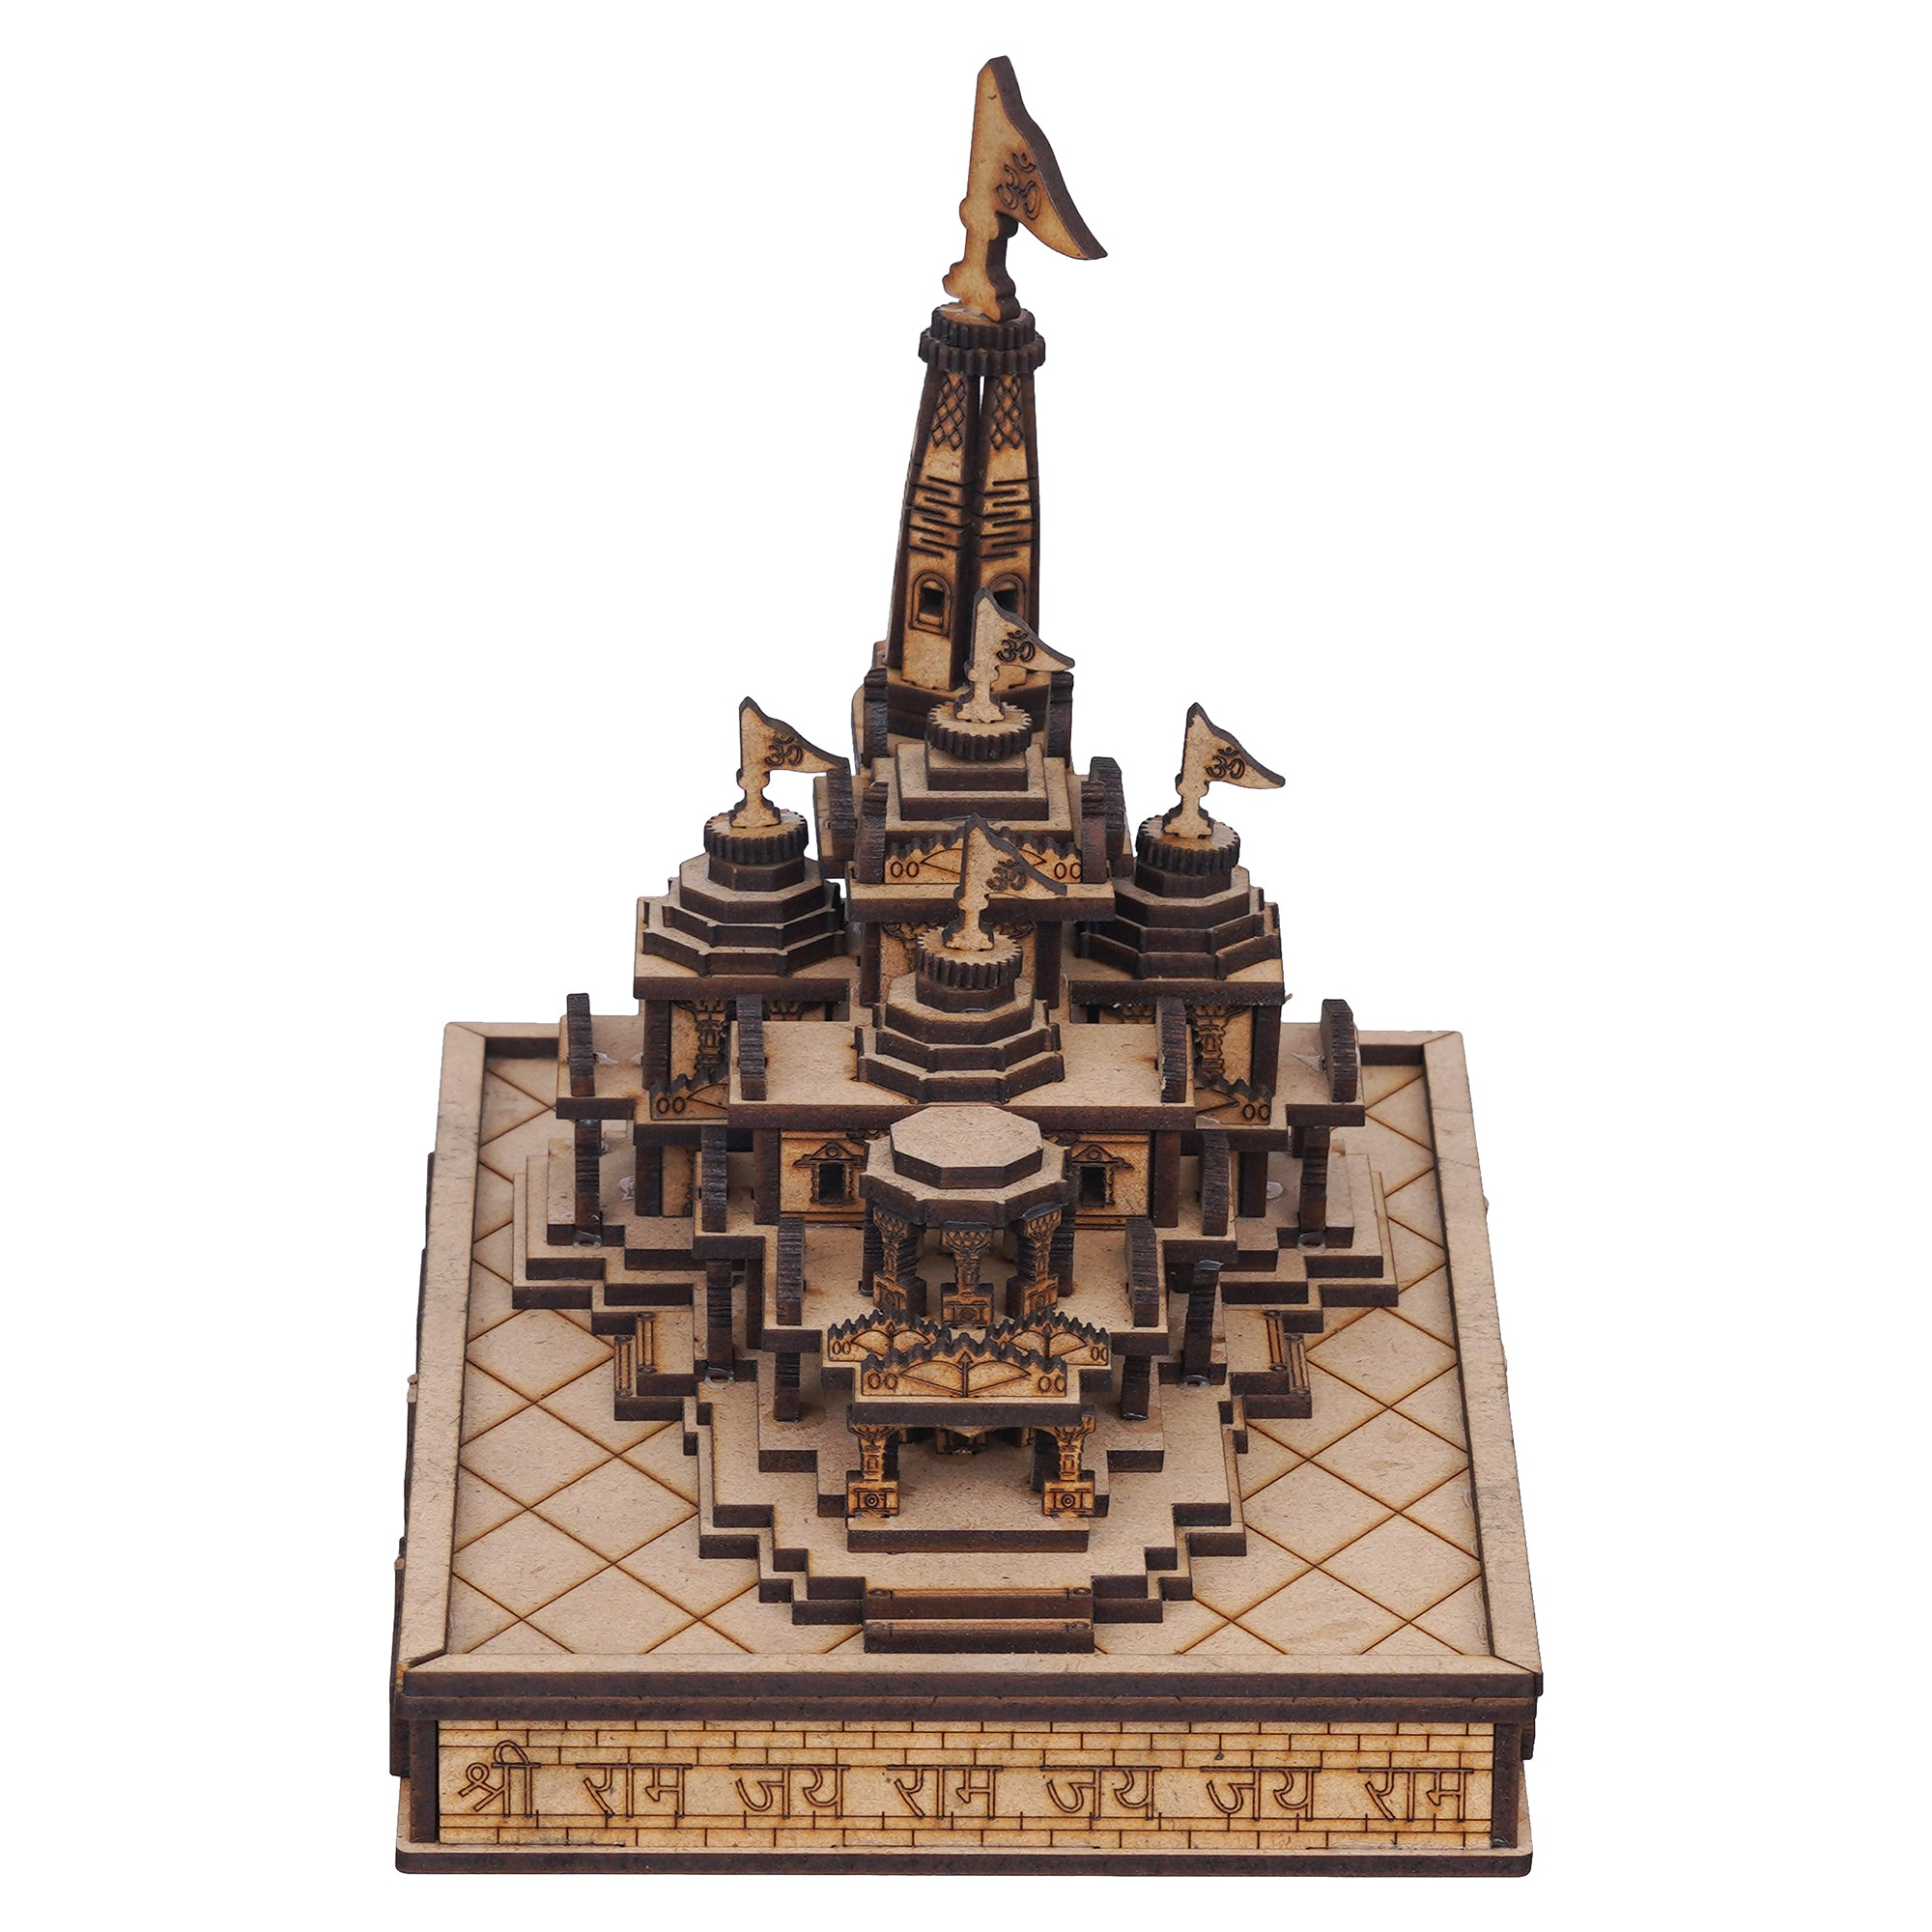 eCraftIndia Shri Ram Mandir Ayodhya Model - Wooden MDF Craftsmanship Authentic Designer Temple - Ideal for Home Temple, Decor, and Spiritual Gifting (Beige, Brown) 7